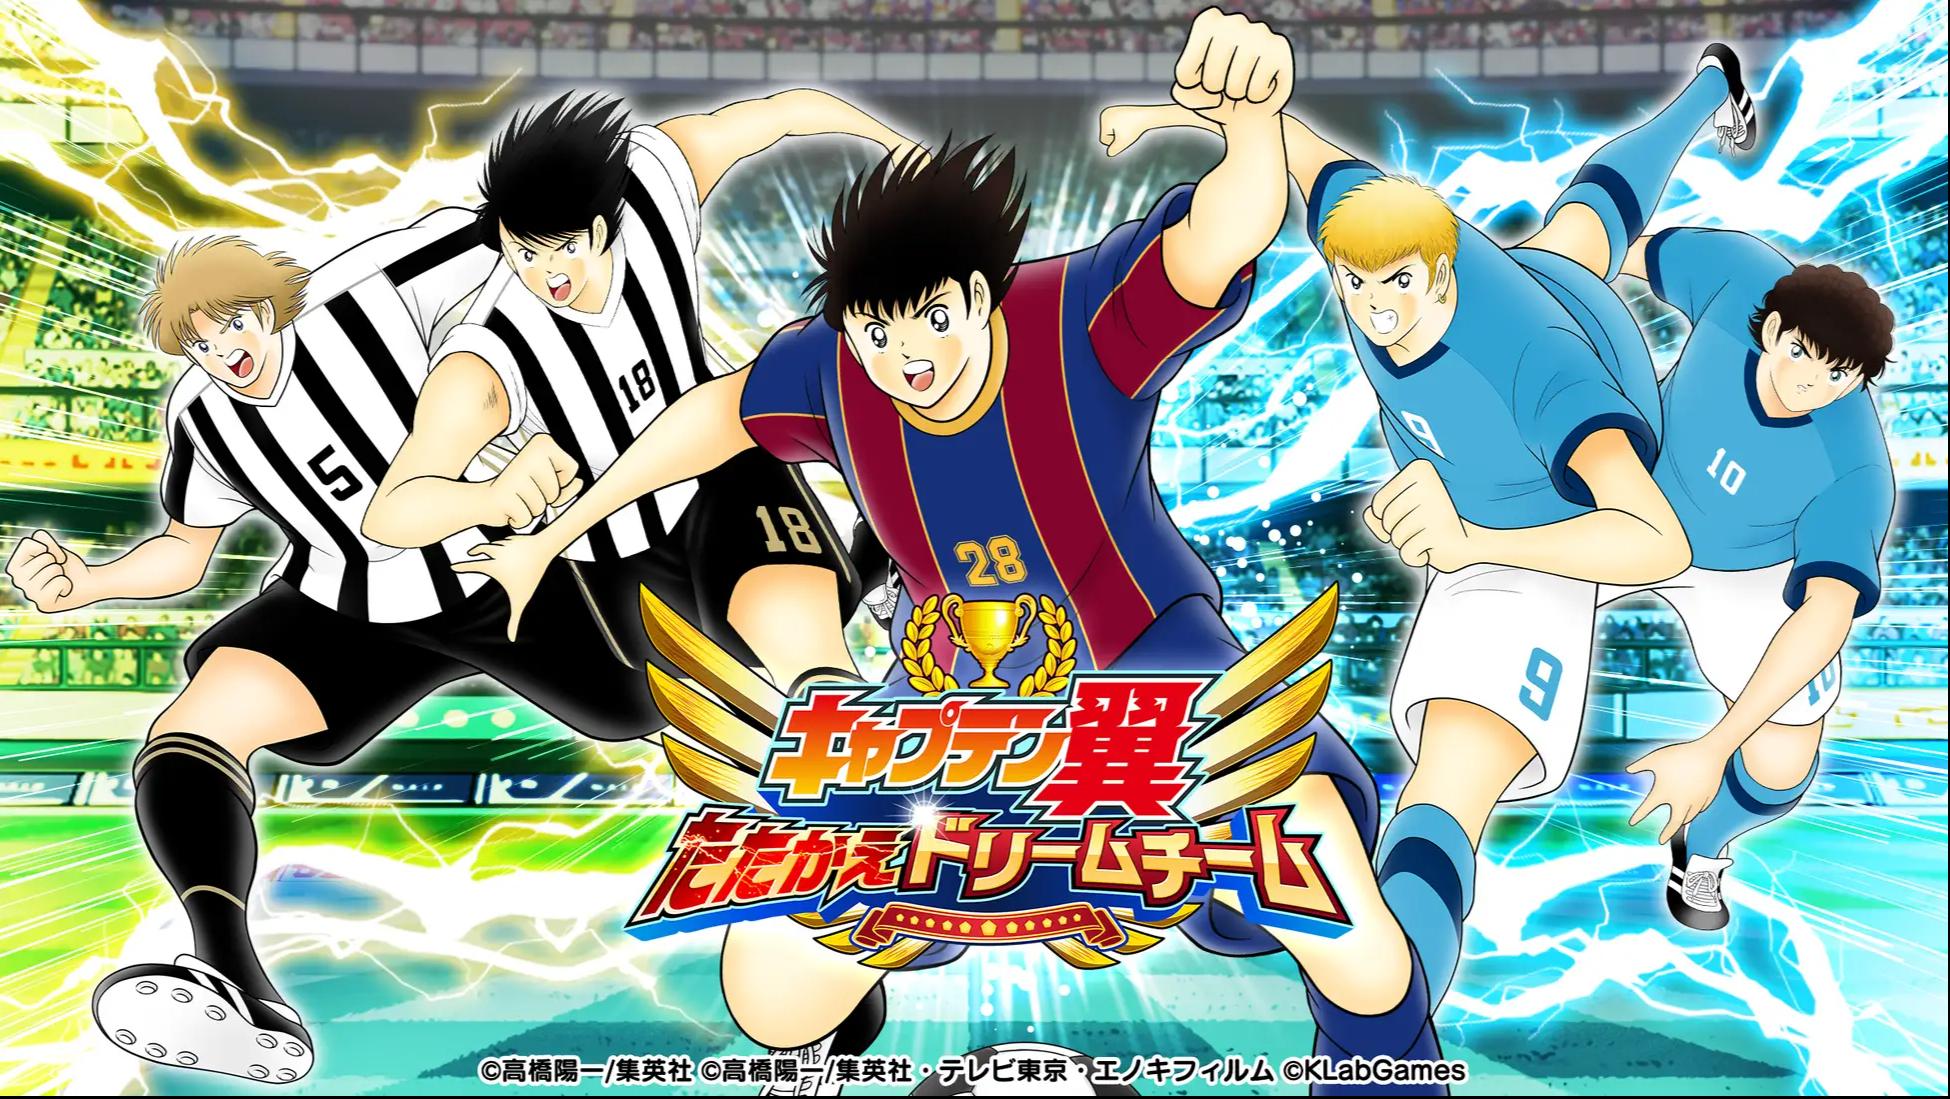 Captain Tsubasa: Dream Team feature image